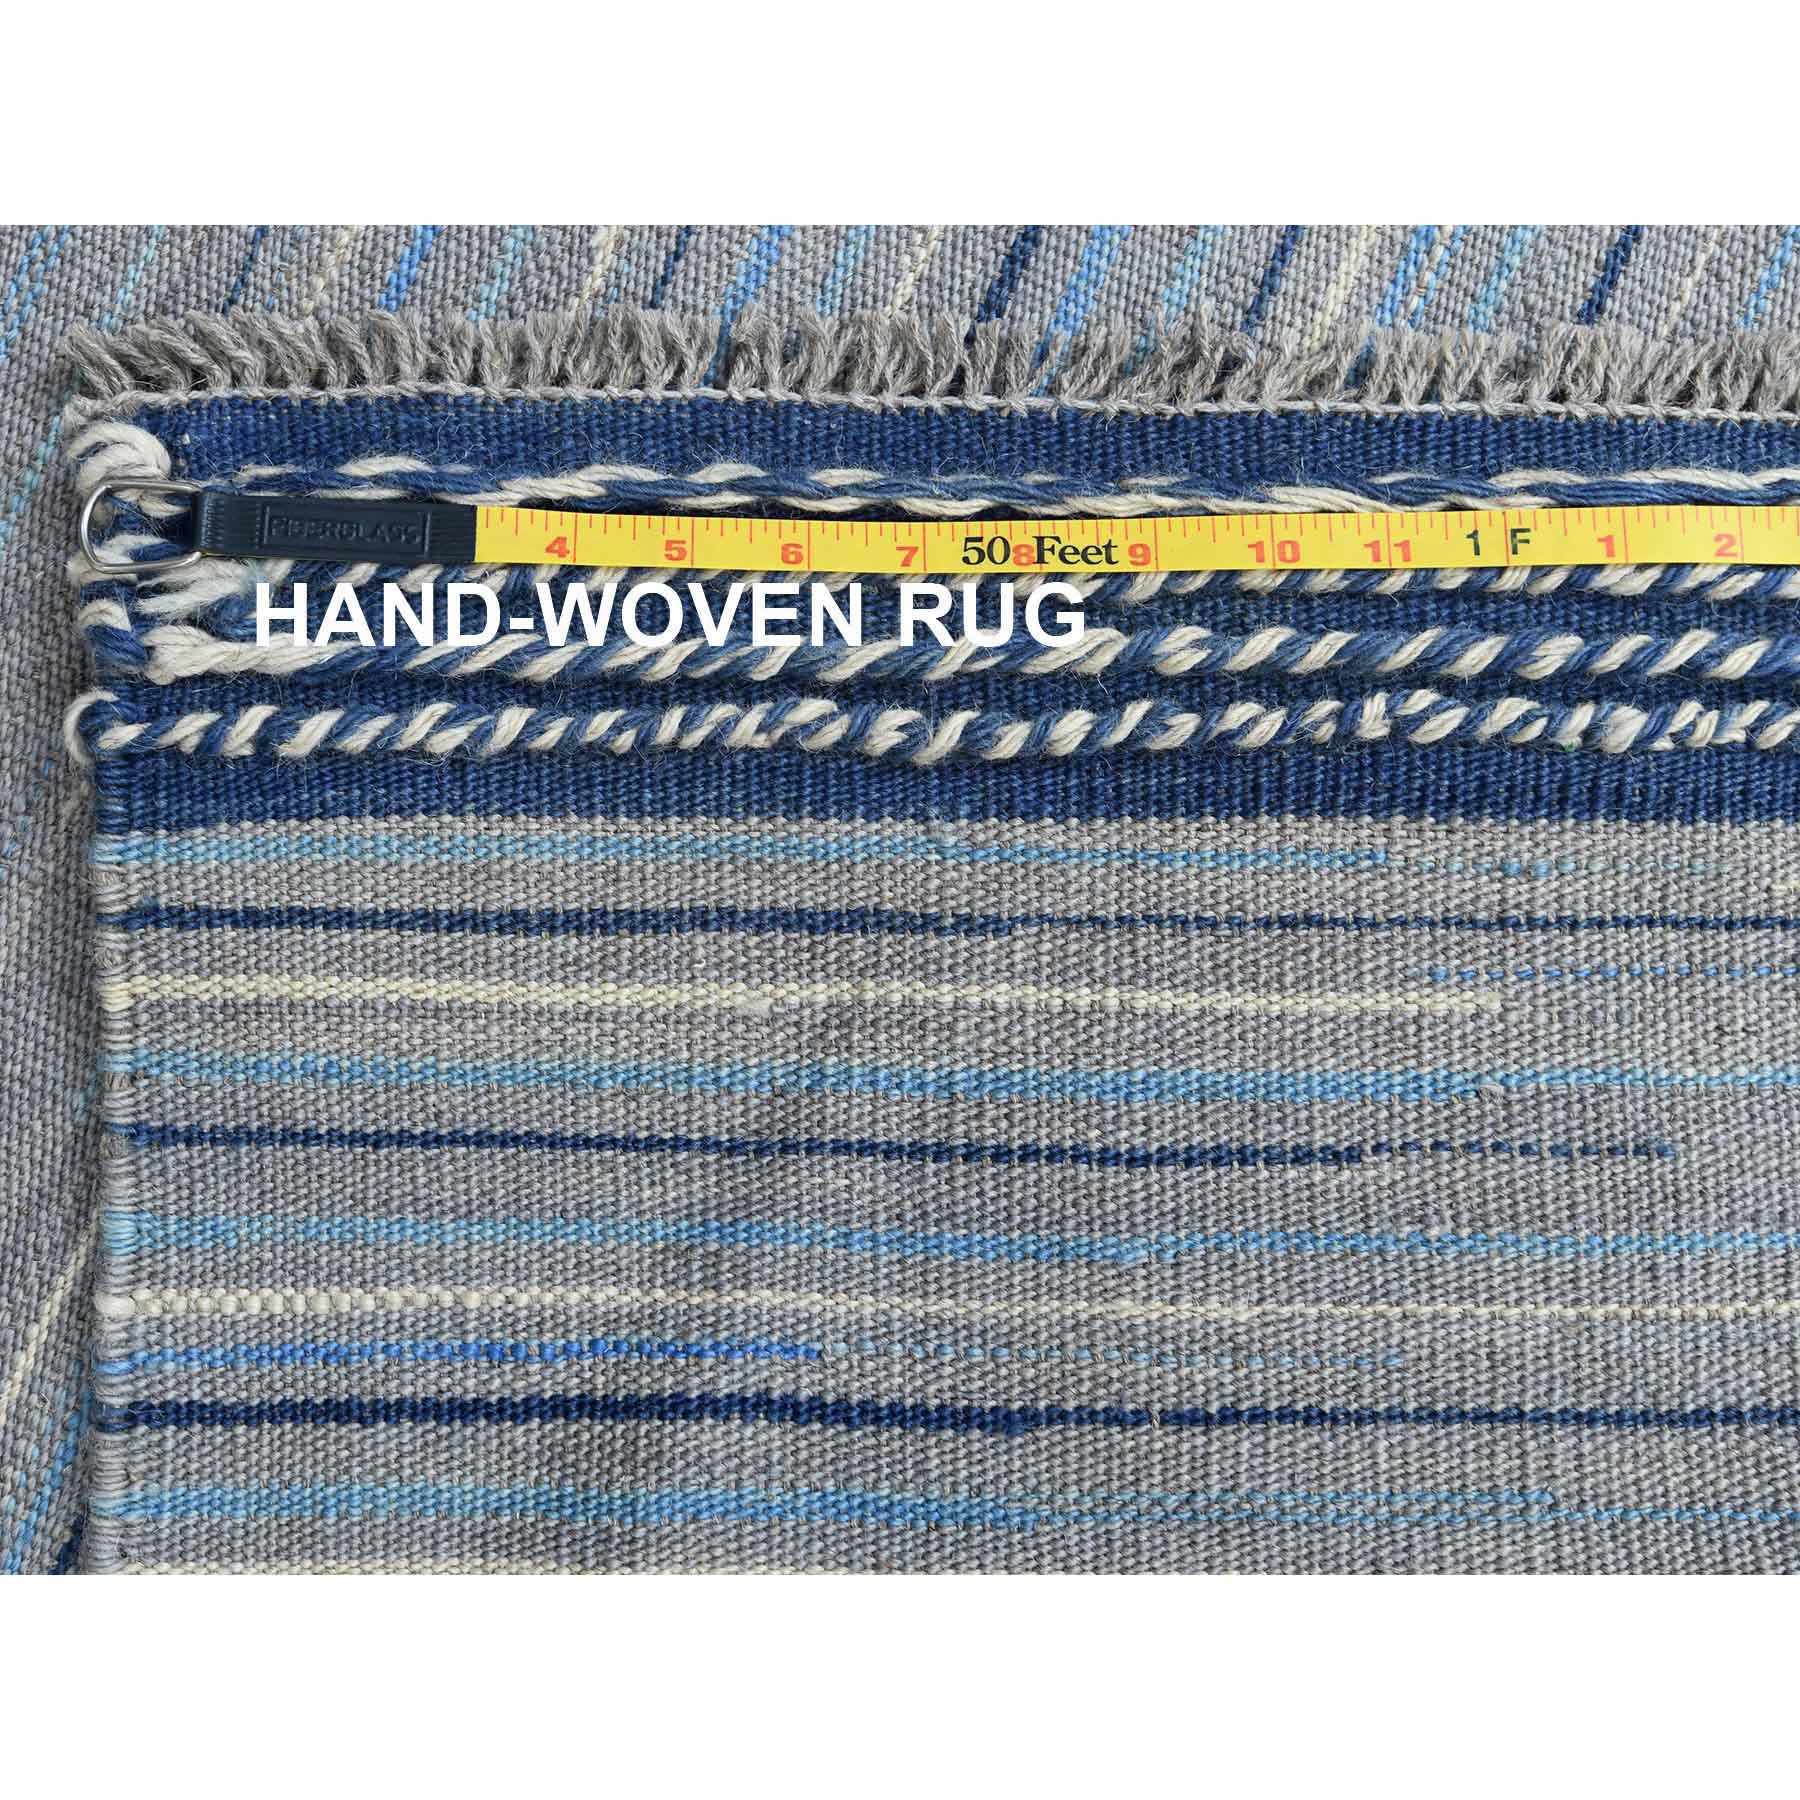 Flat-Weave-Hand-Woven-Rug-300565